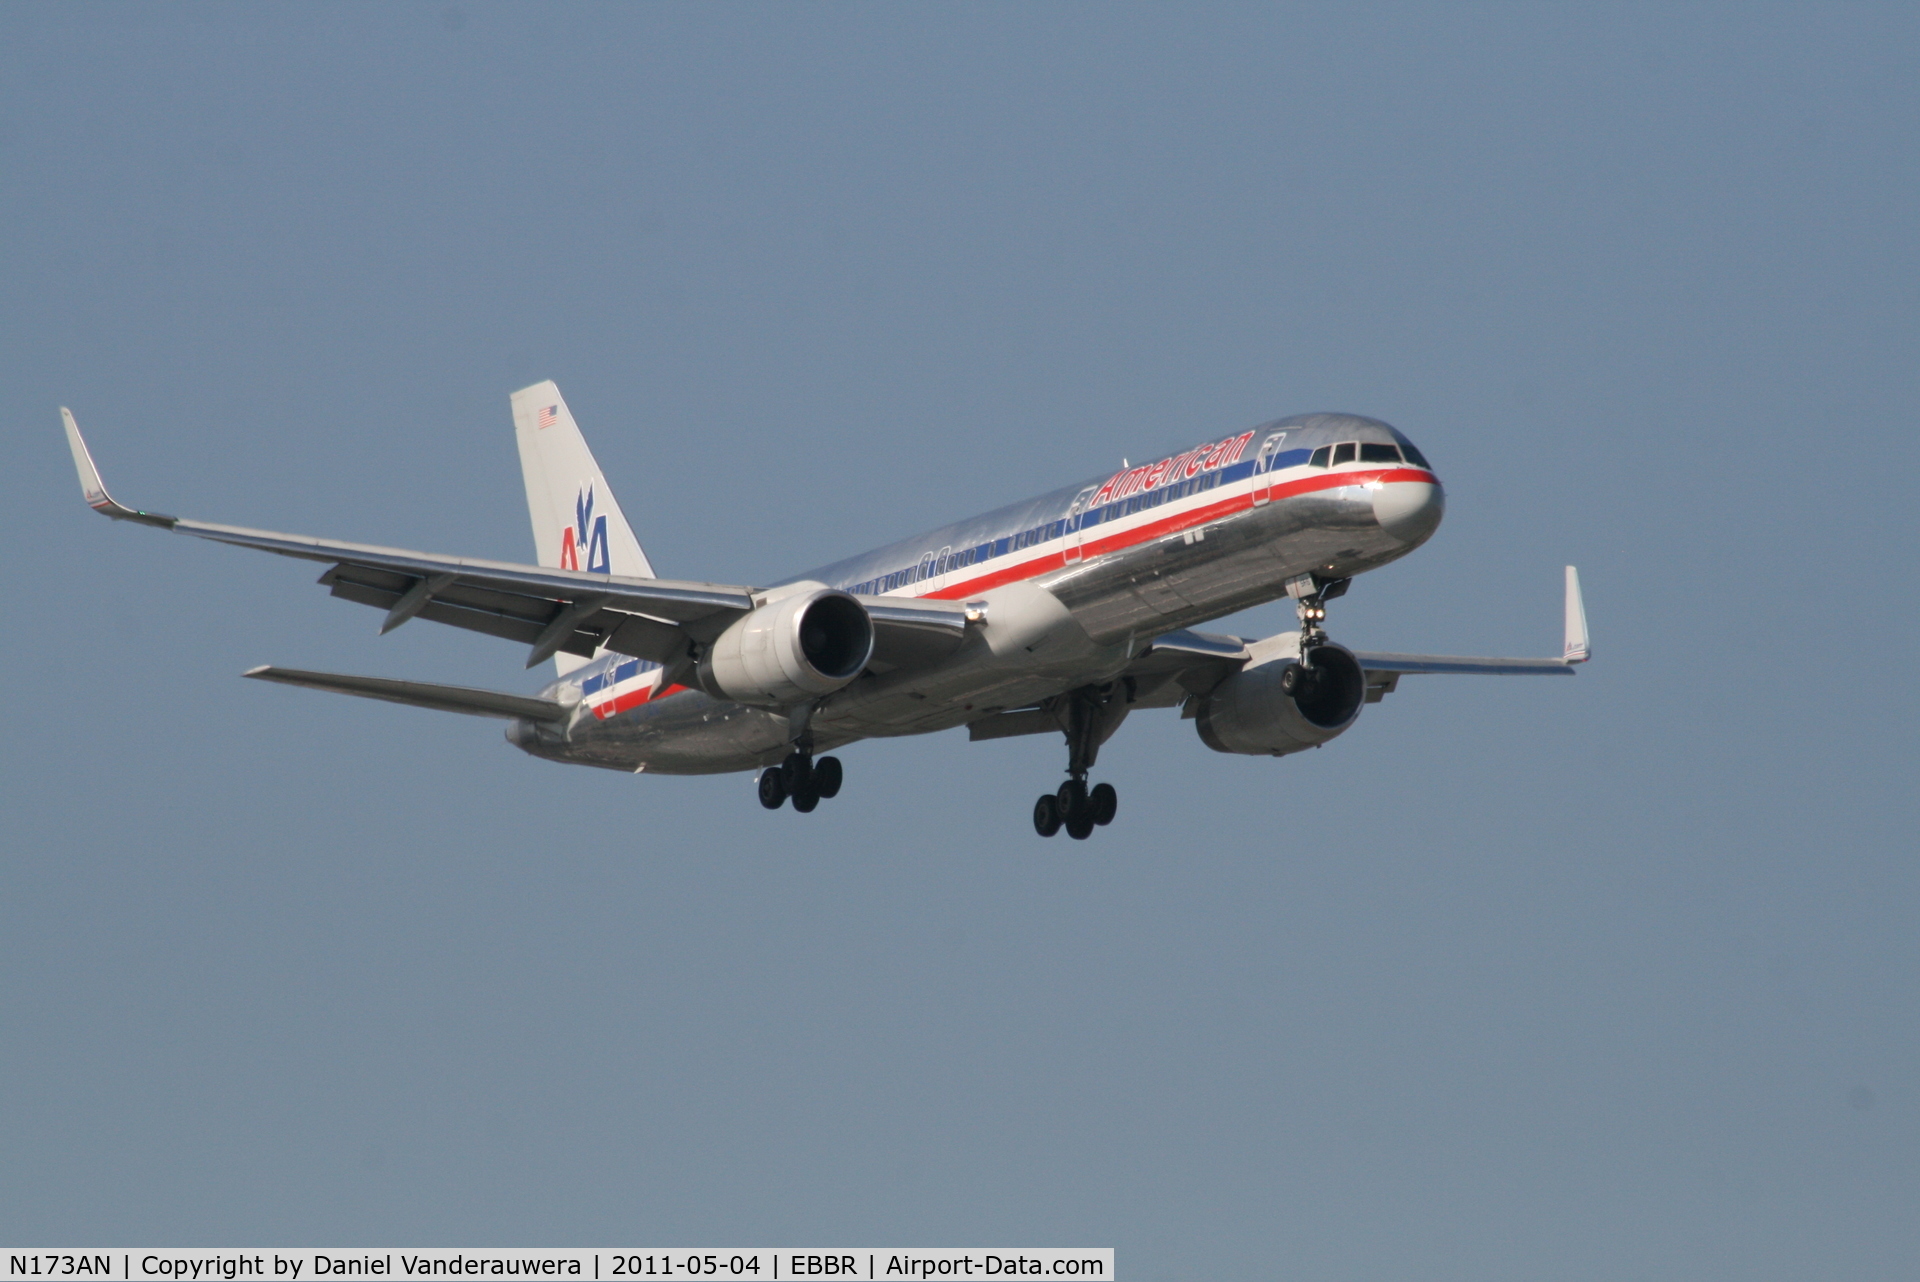 N173AN, 2002 Boeing 757-223 C/N 32399, On approach to RWY 02